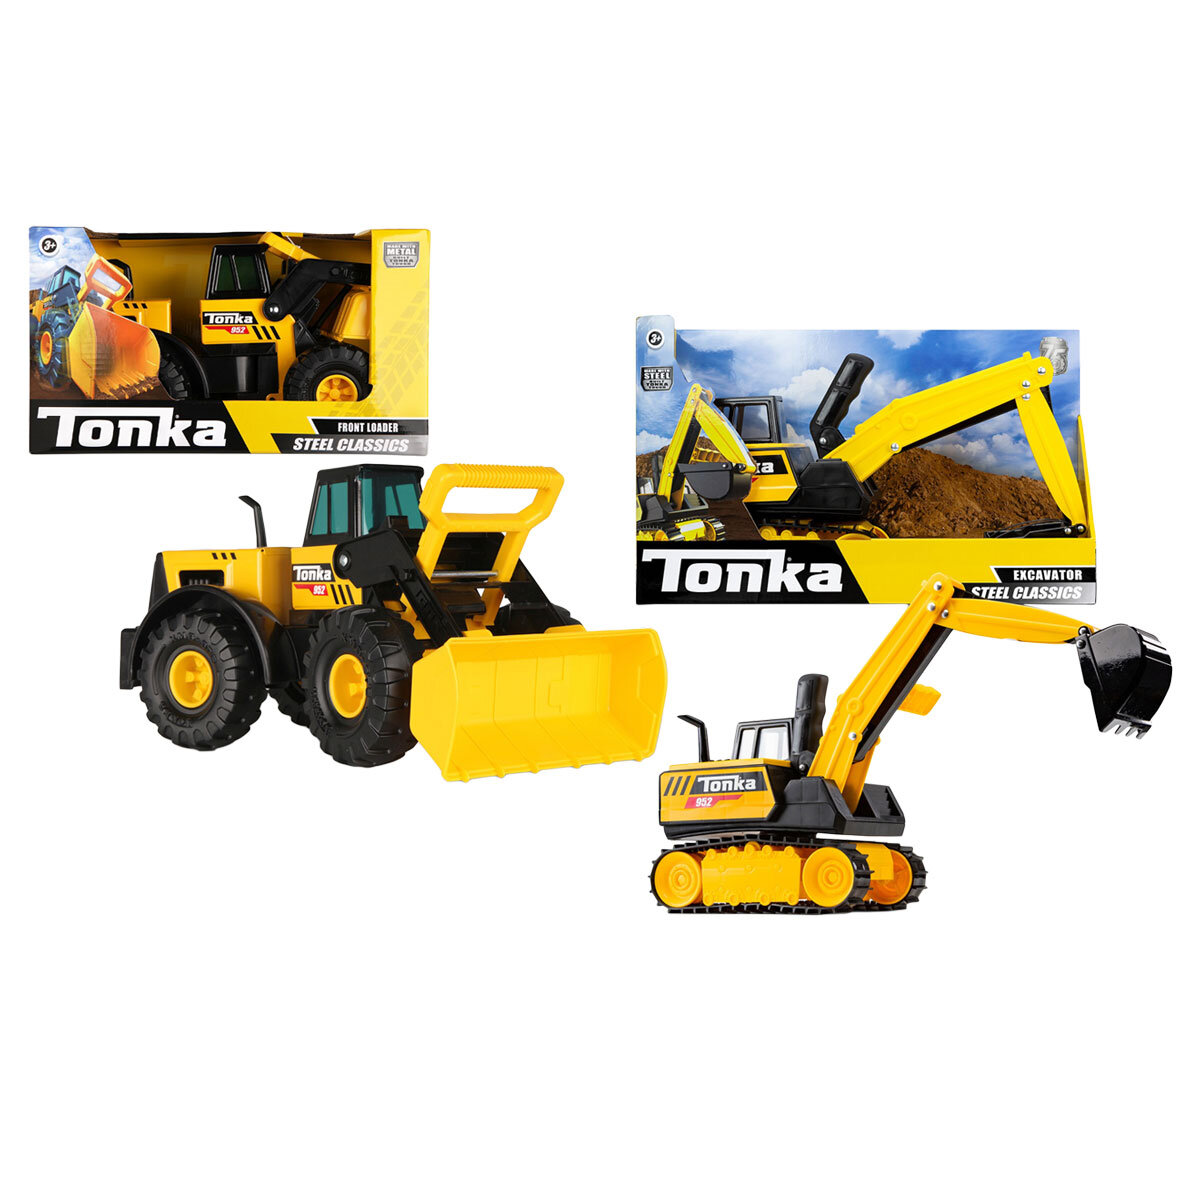 Buy Tonka Steel Excavator & Front Loader Bundle Combined Image at Costco.co.uk